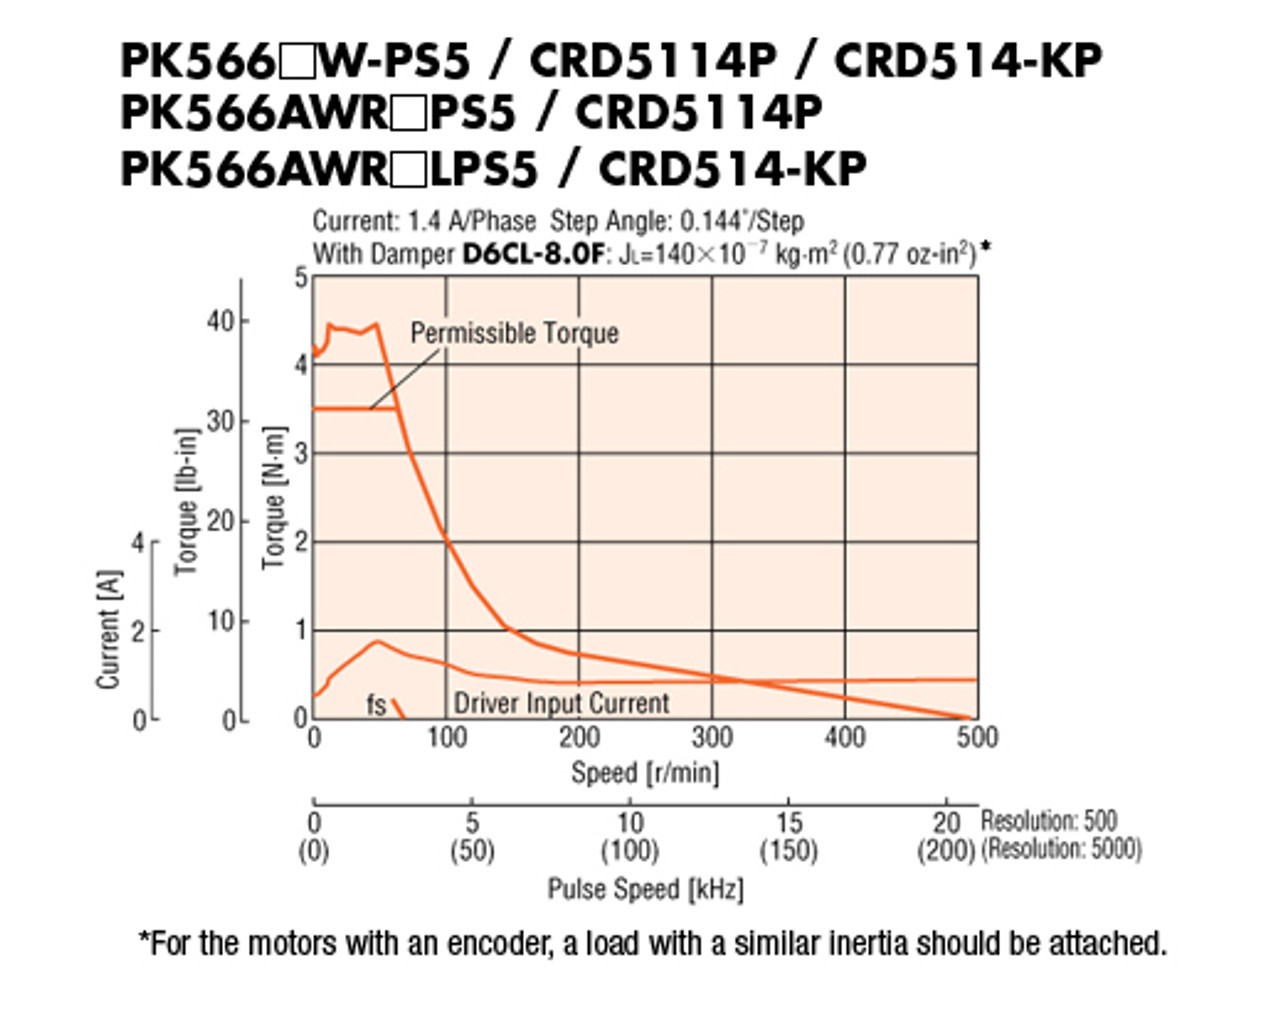 PK566AW-PS5 - Speed-Torque